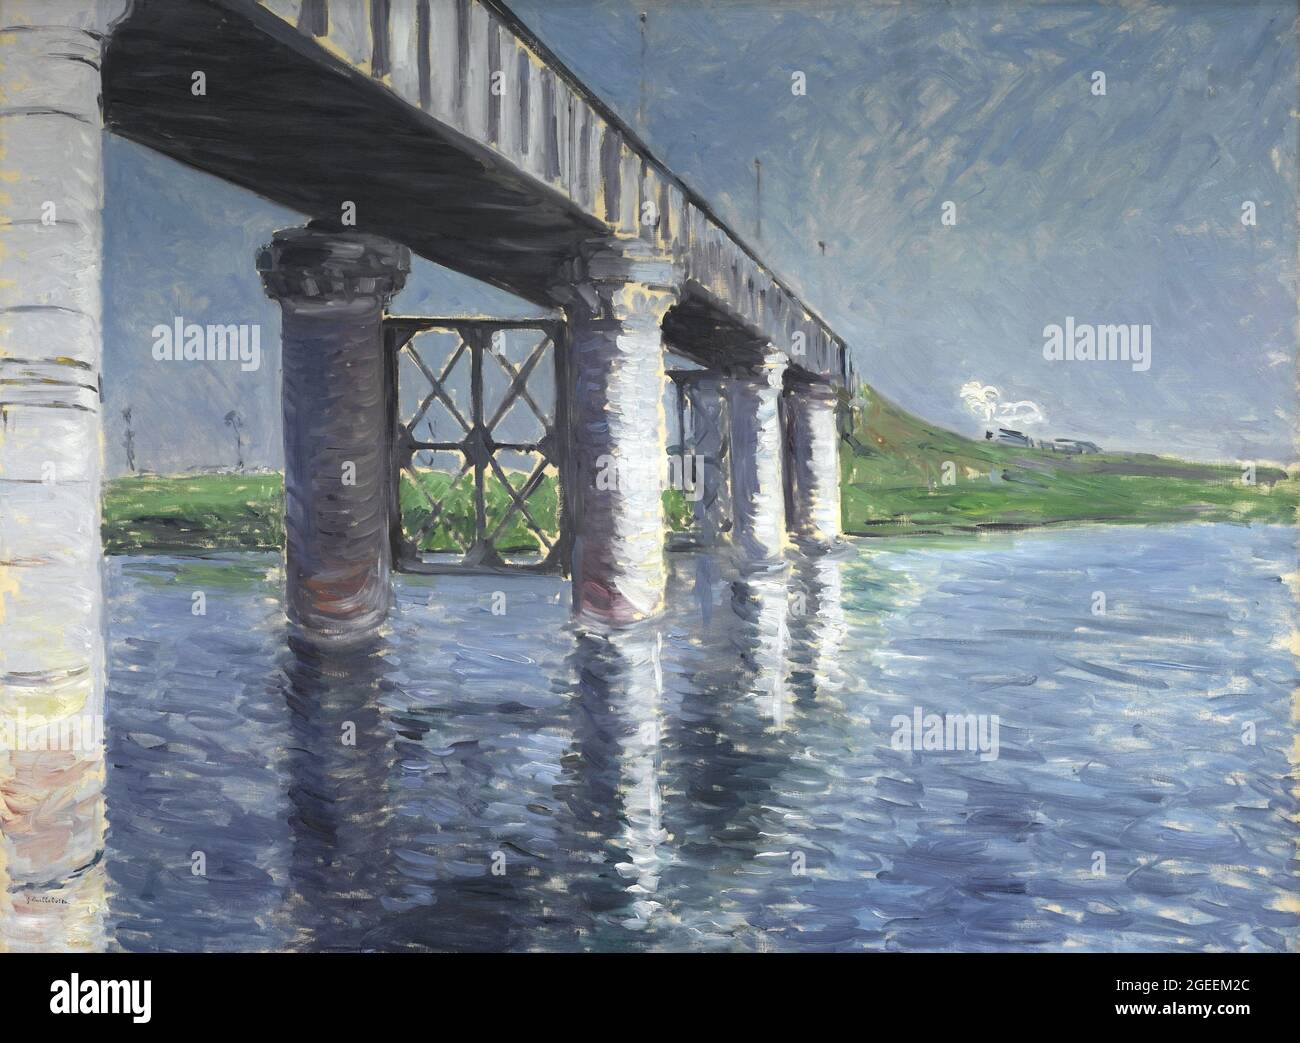 Titel: The Bridge at Argenteuil Ersteller: Gustave Caillebotte Datum: 1885-1887 Medium: Öl auf Leinwand Größe: 114.6x155.6 cms Ort: Brooklyn Museum of Art, New York, USA Stockfoto